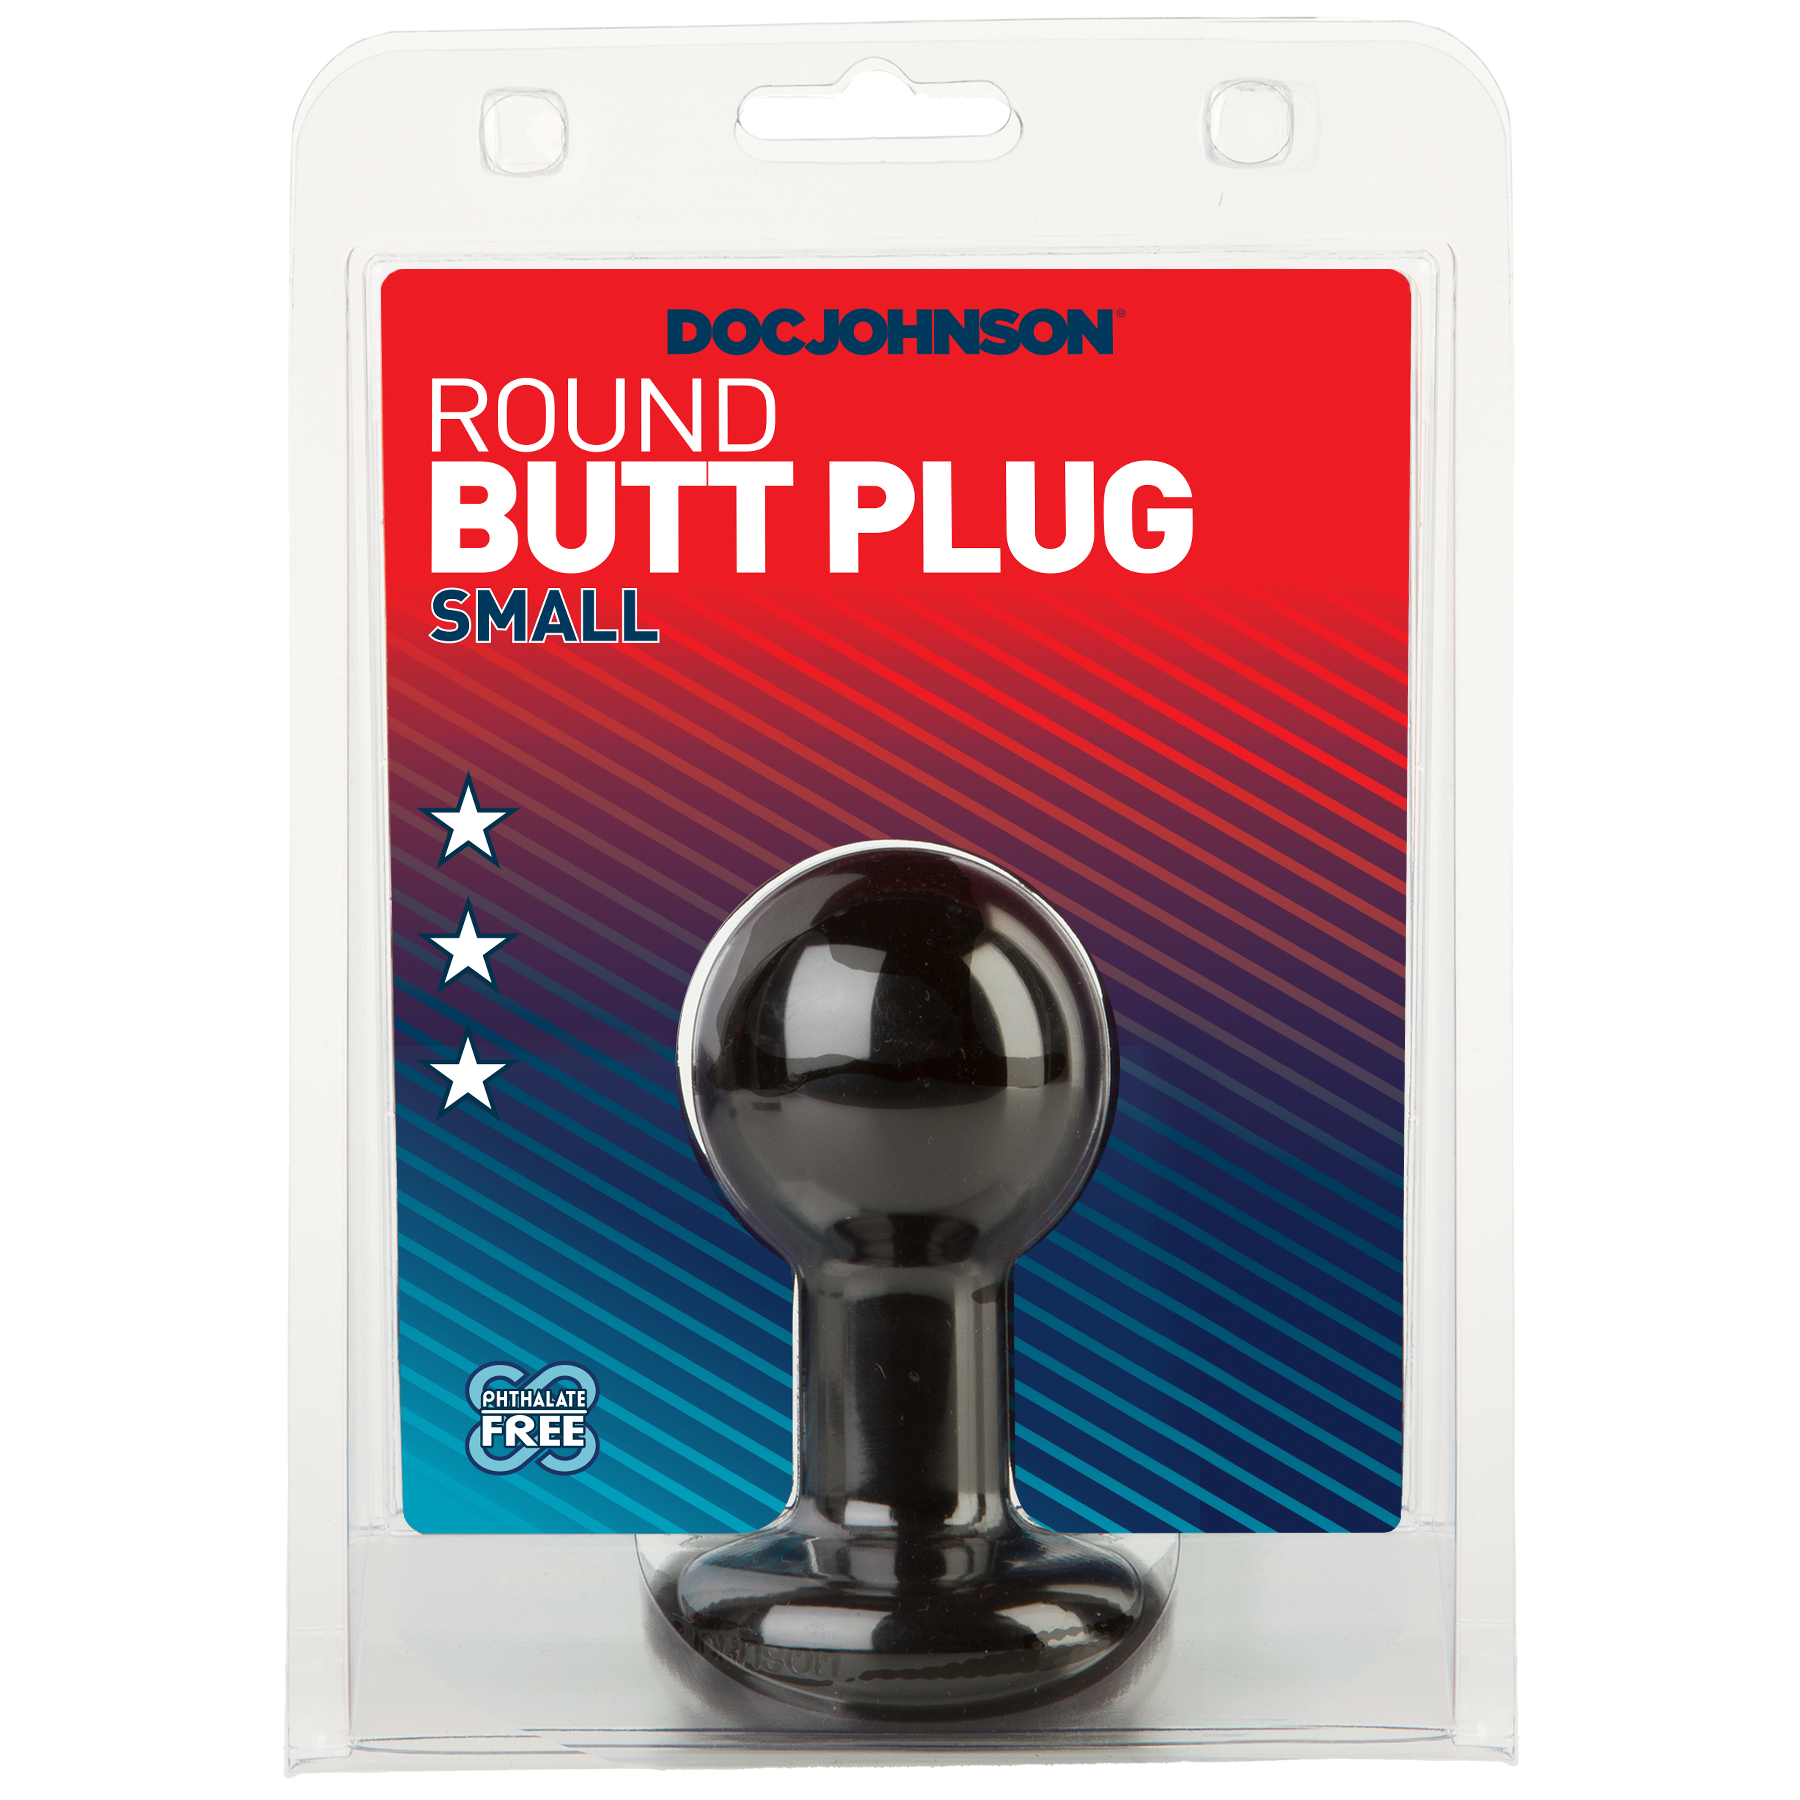 Doc Johnson Round • Butt Plug